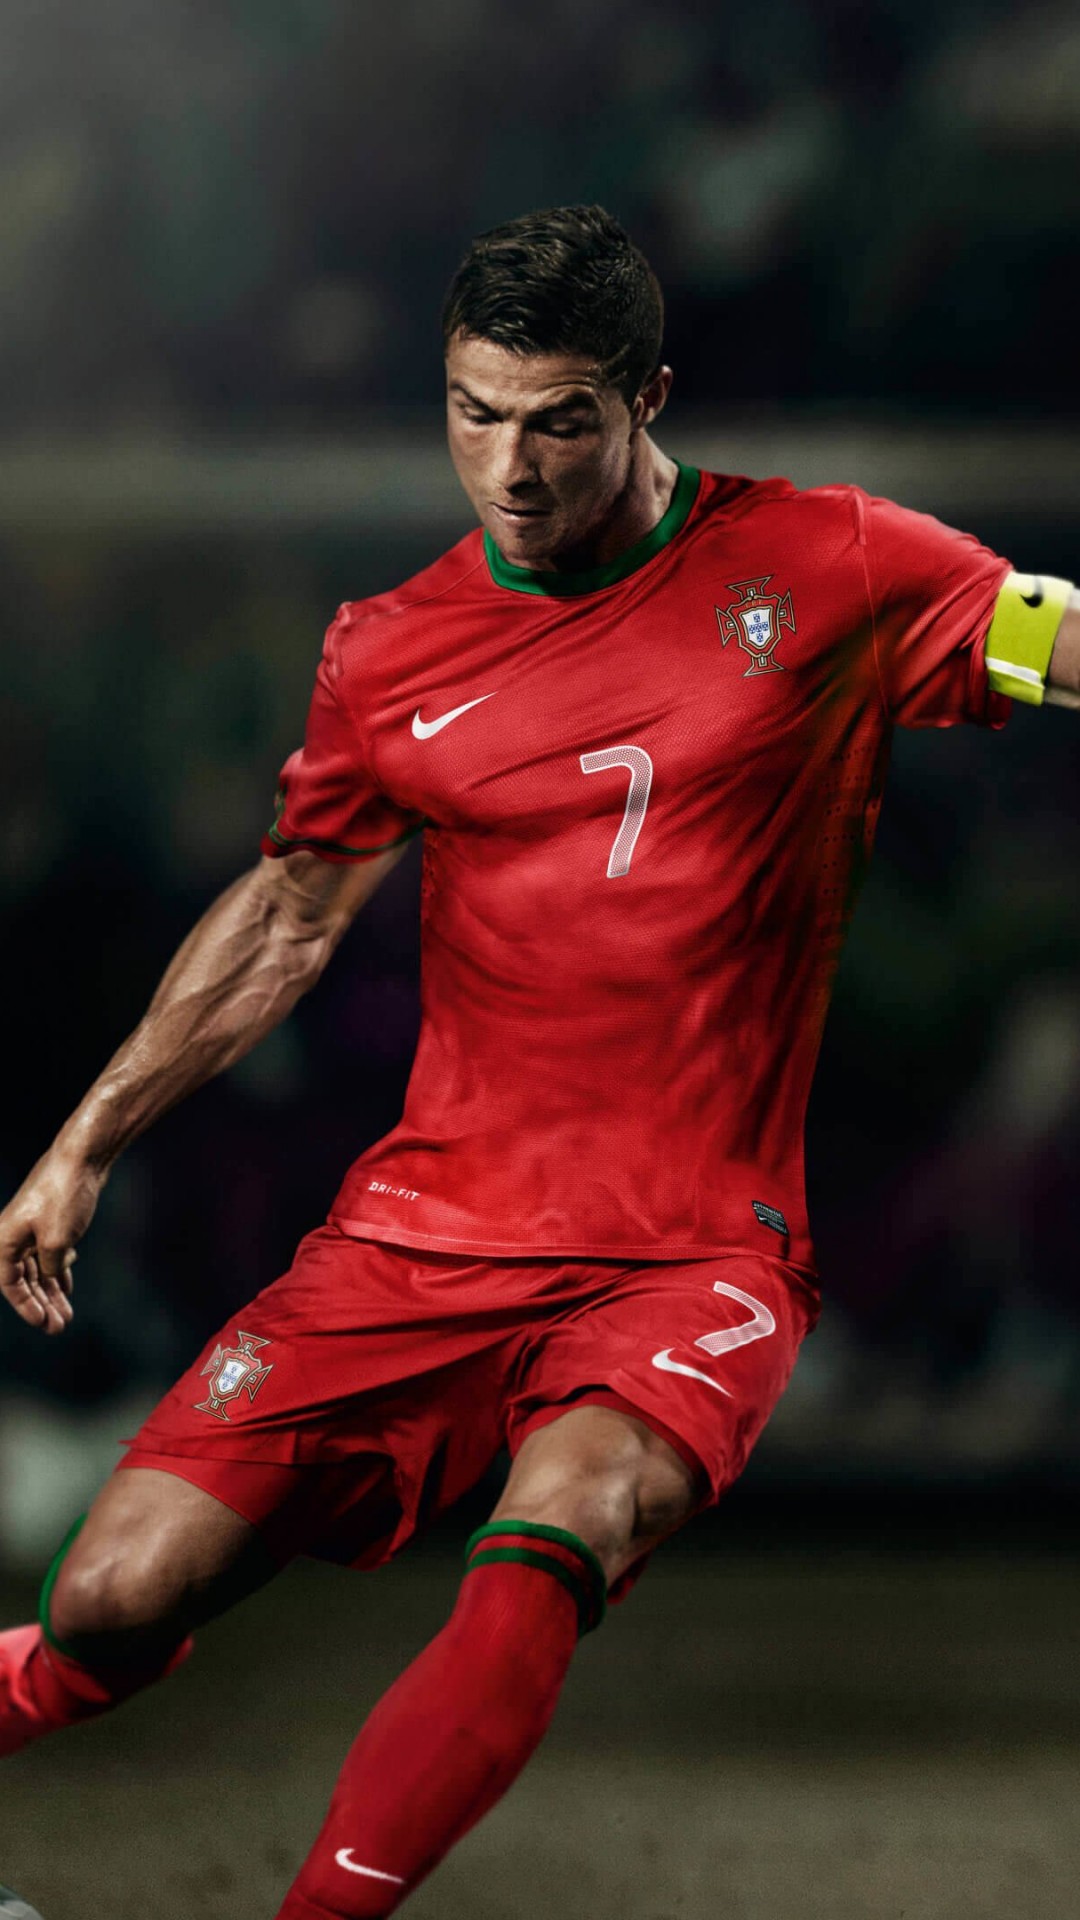 Cristiano Ronaldo In Portugal Jersey Wallpaper for LG G2